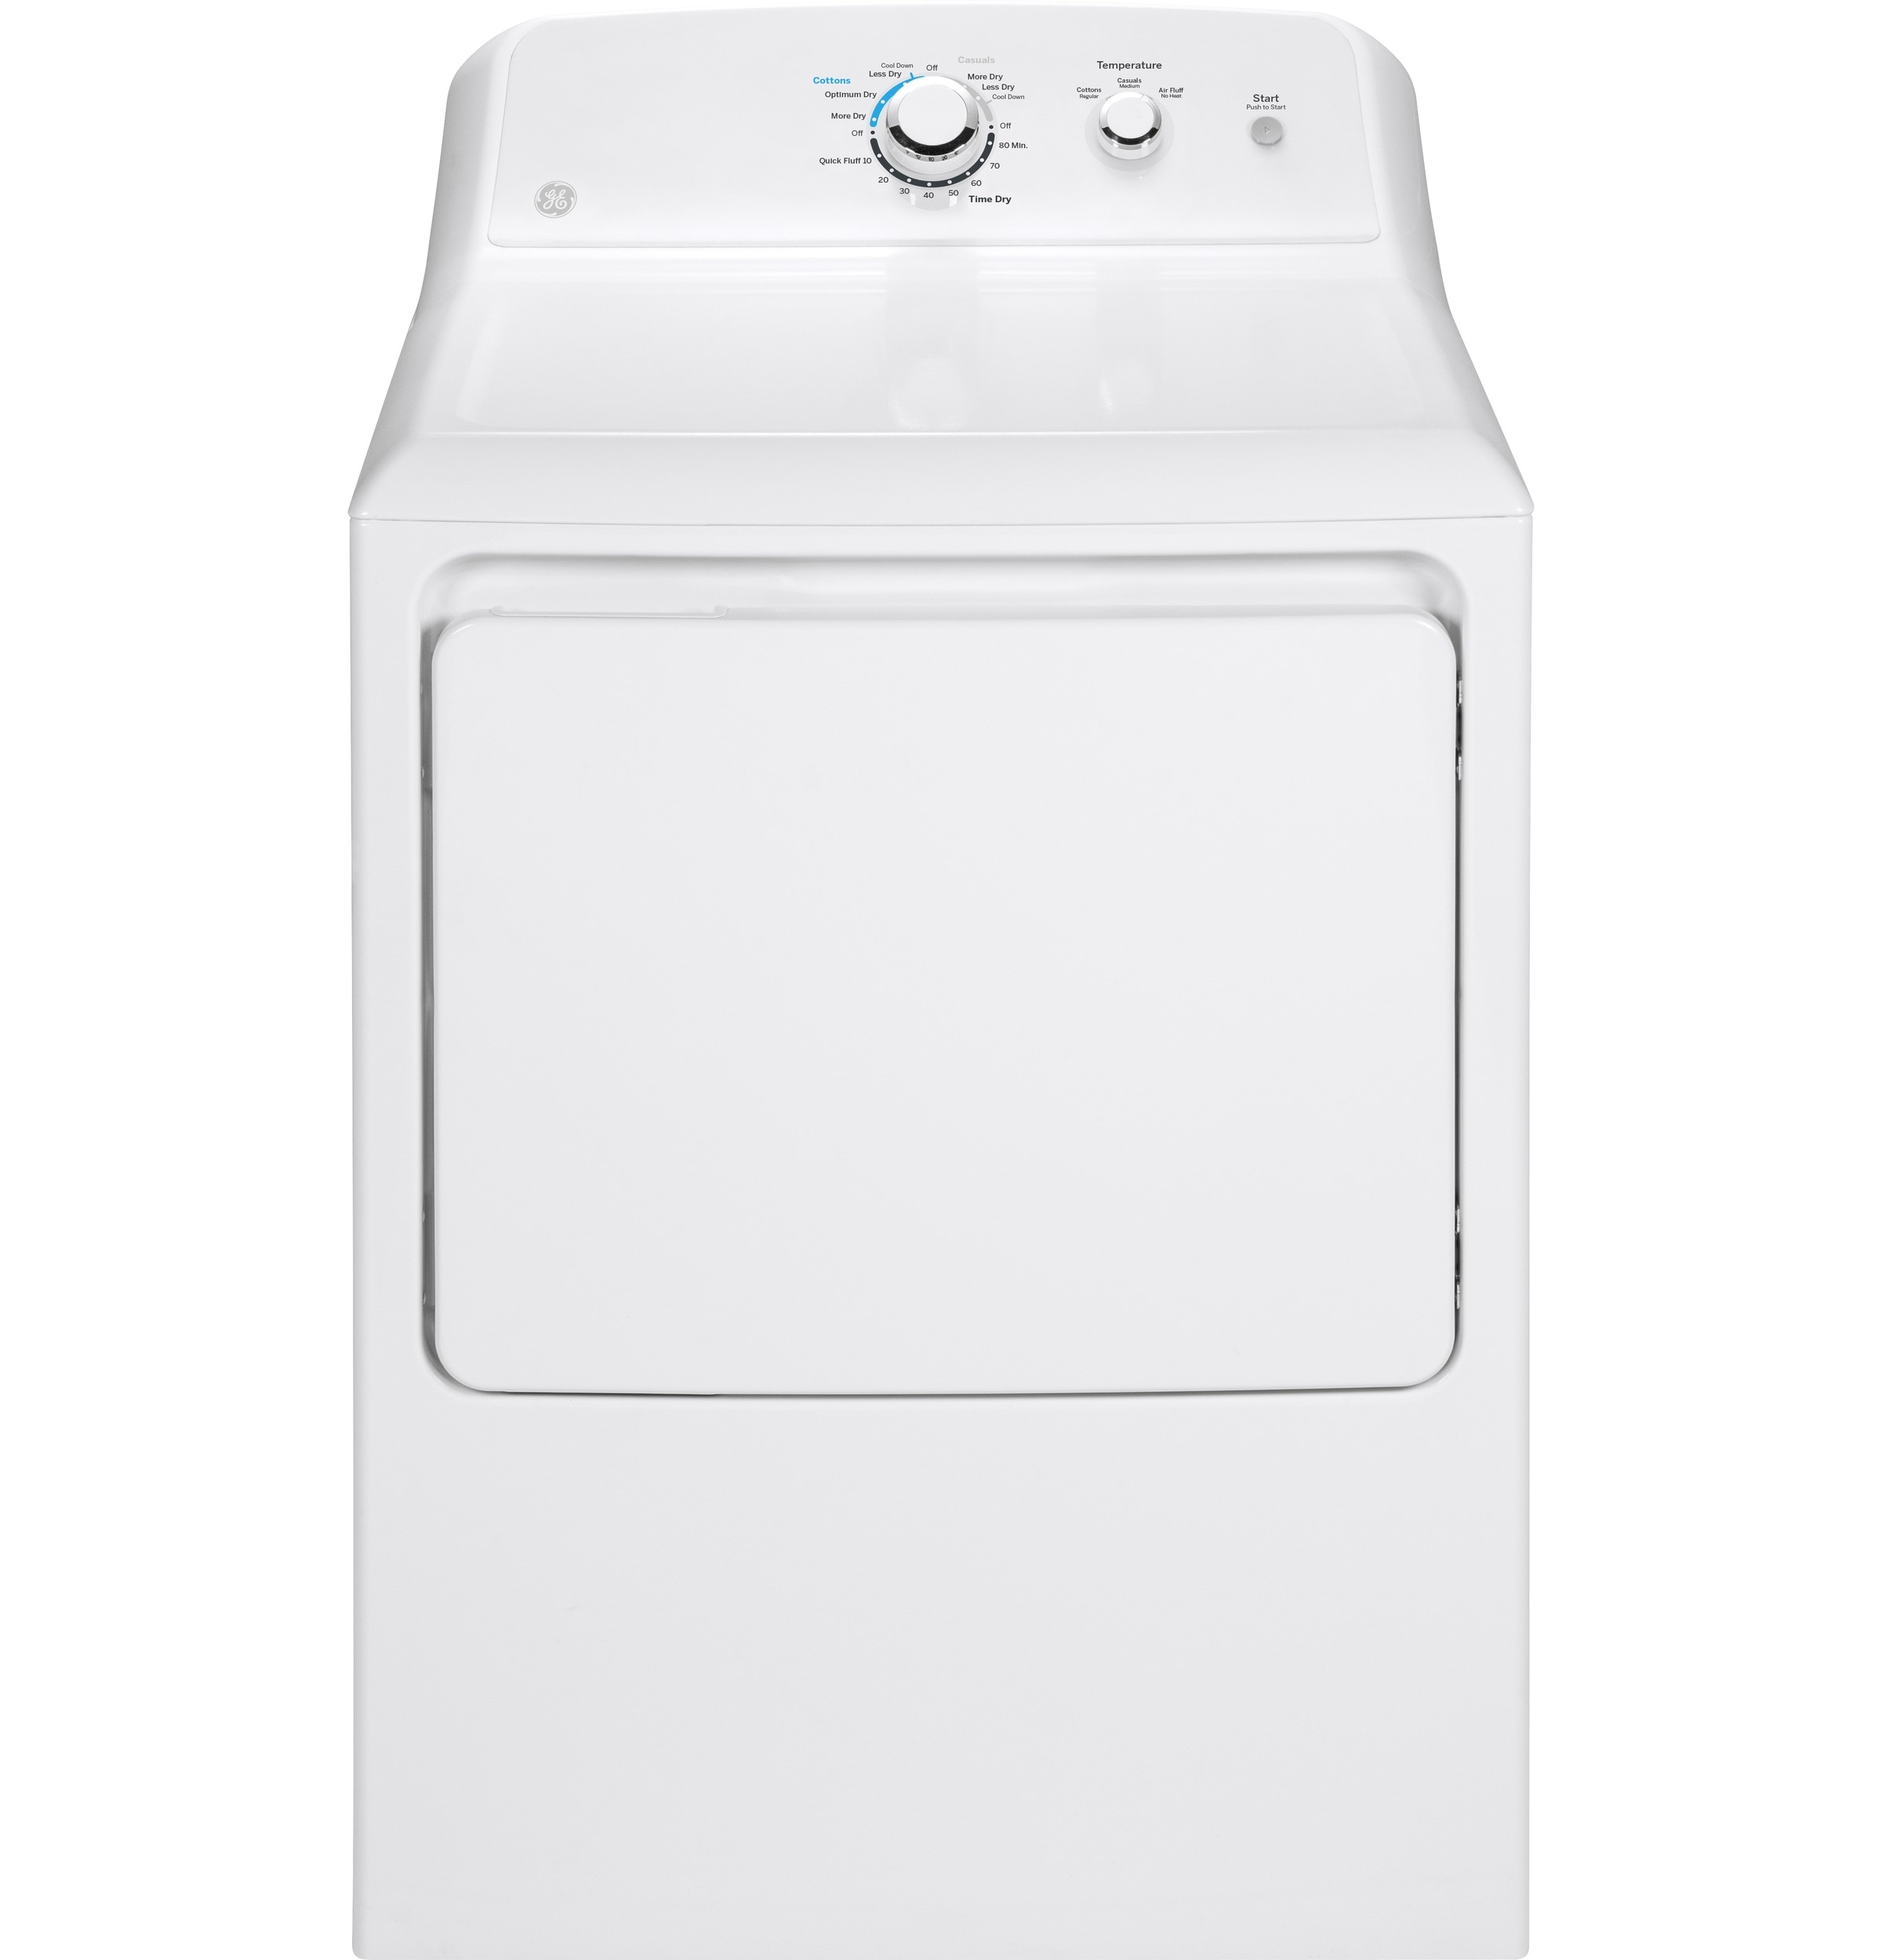 Resin Dryer Machine, Resin Dryers, Plastic Scrap Washing And